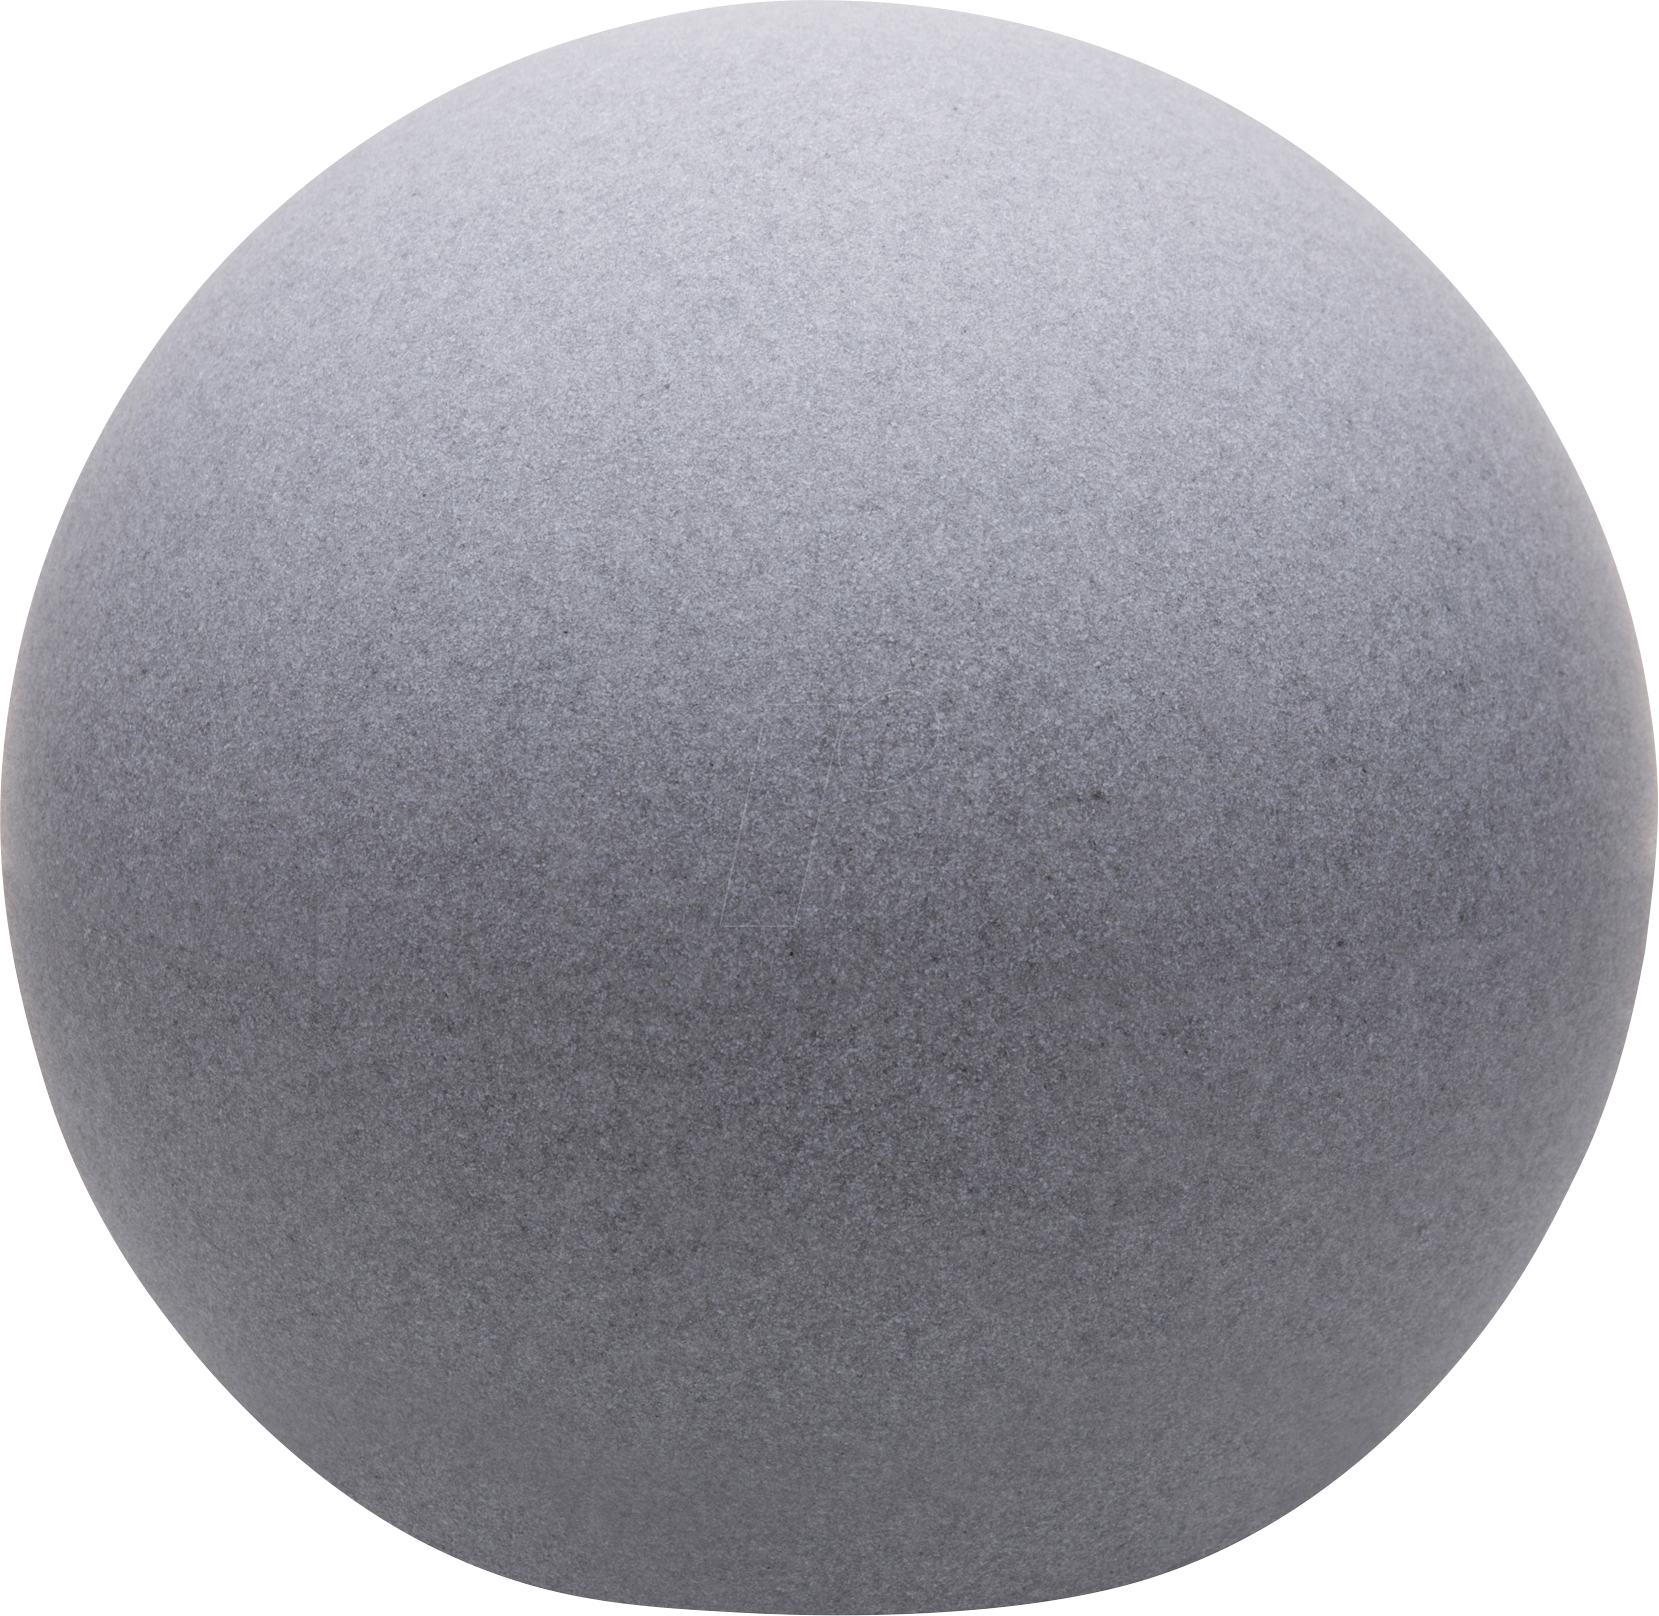 MLI 404082 - Smart Light, tint, Leuchtkugel Calluna, ��Ø 30 cm, stone von TINT